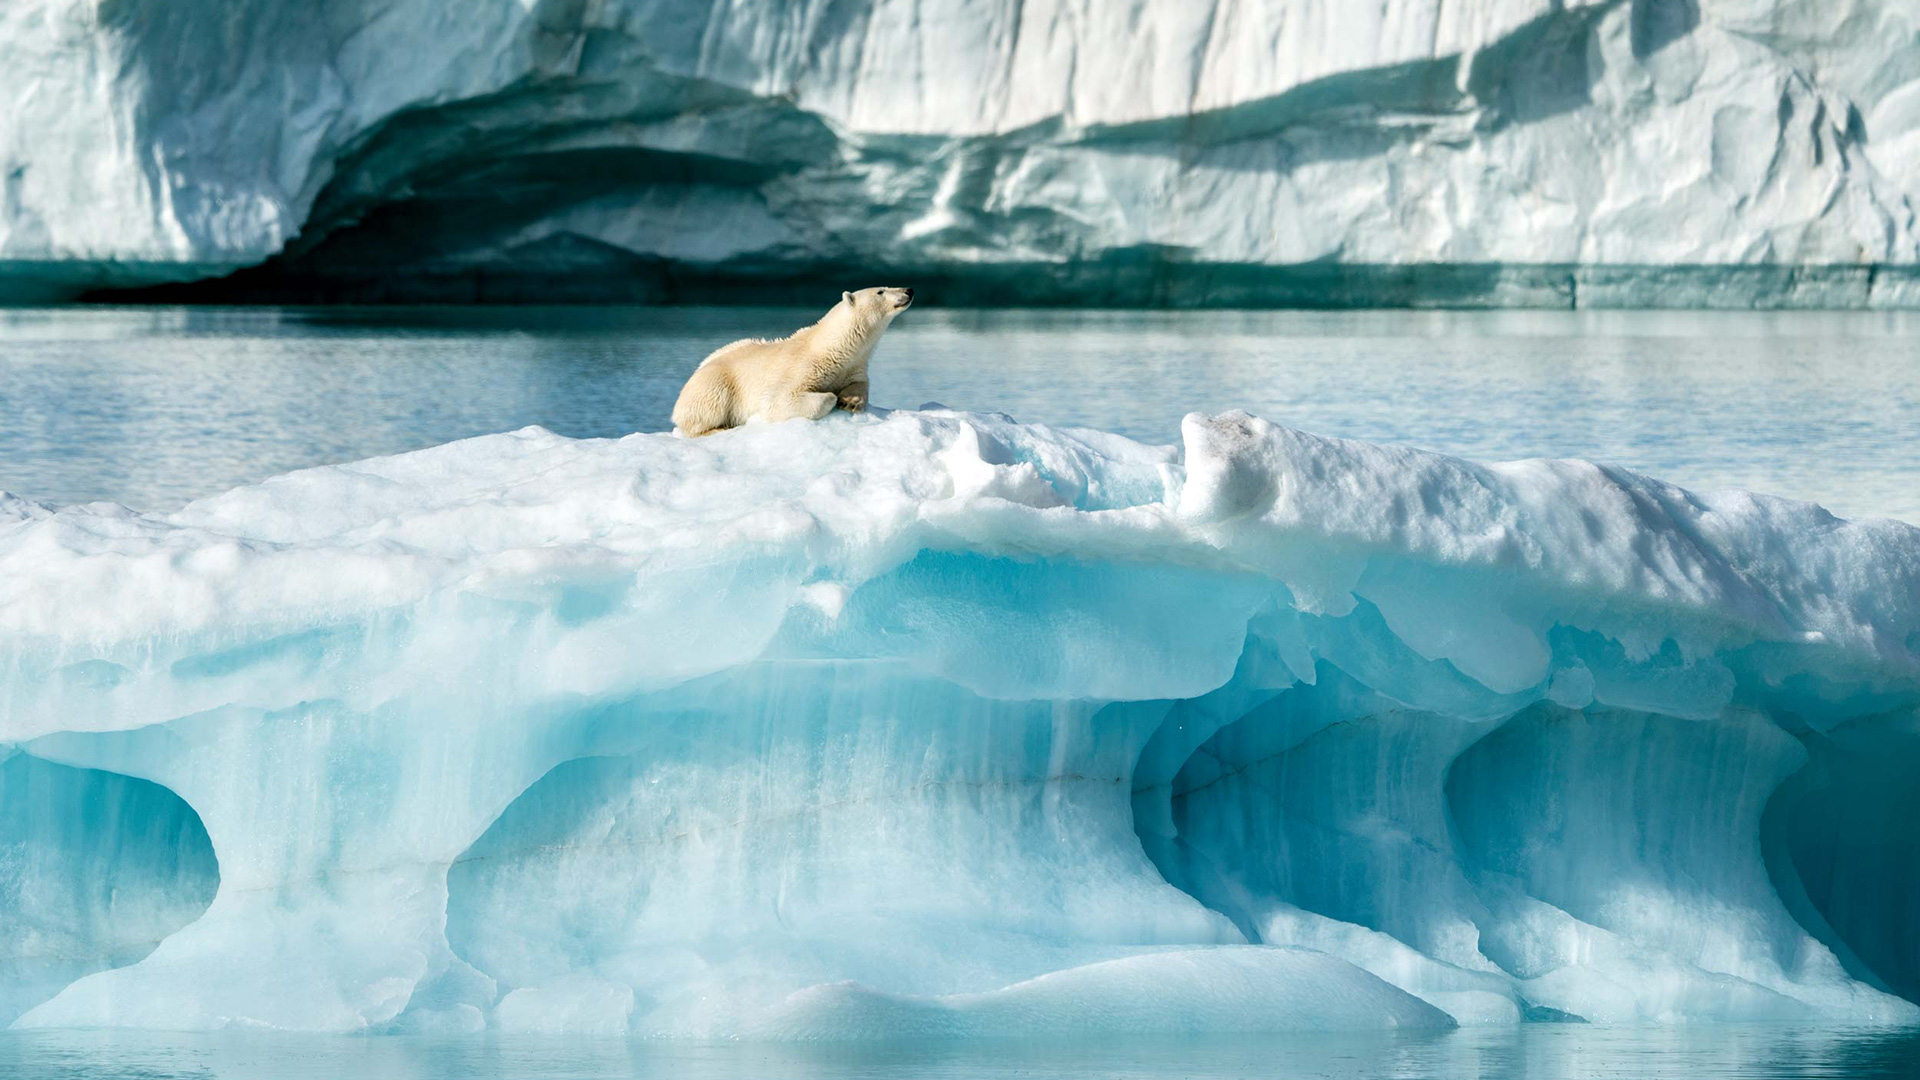 eyos-arctic-svalbard-polar-bear-by-justin-hofman-2560